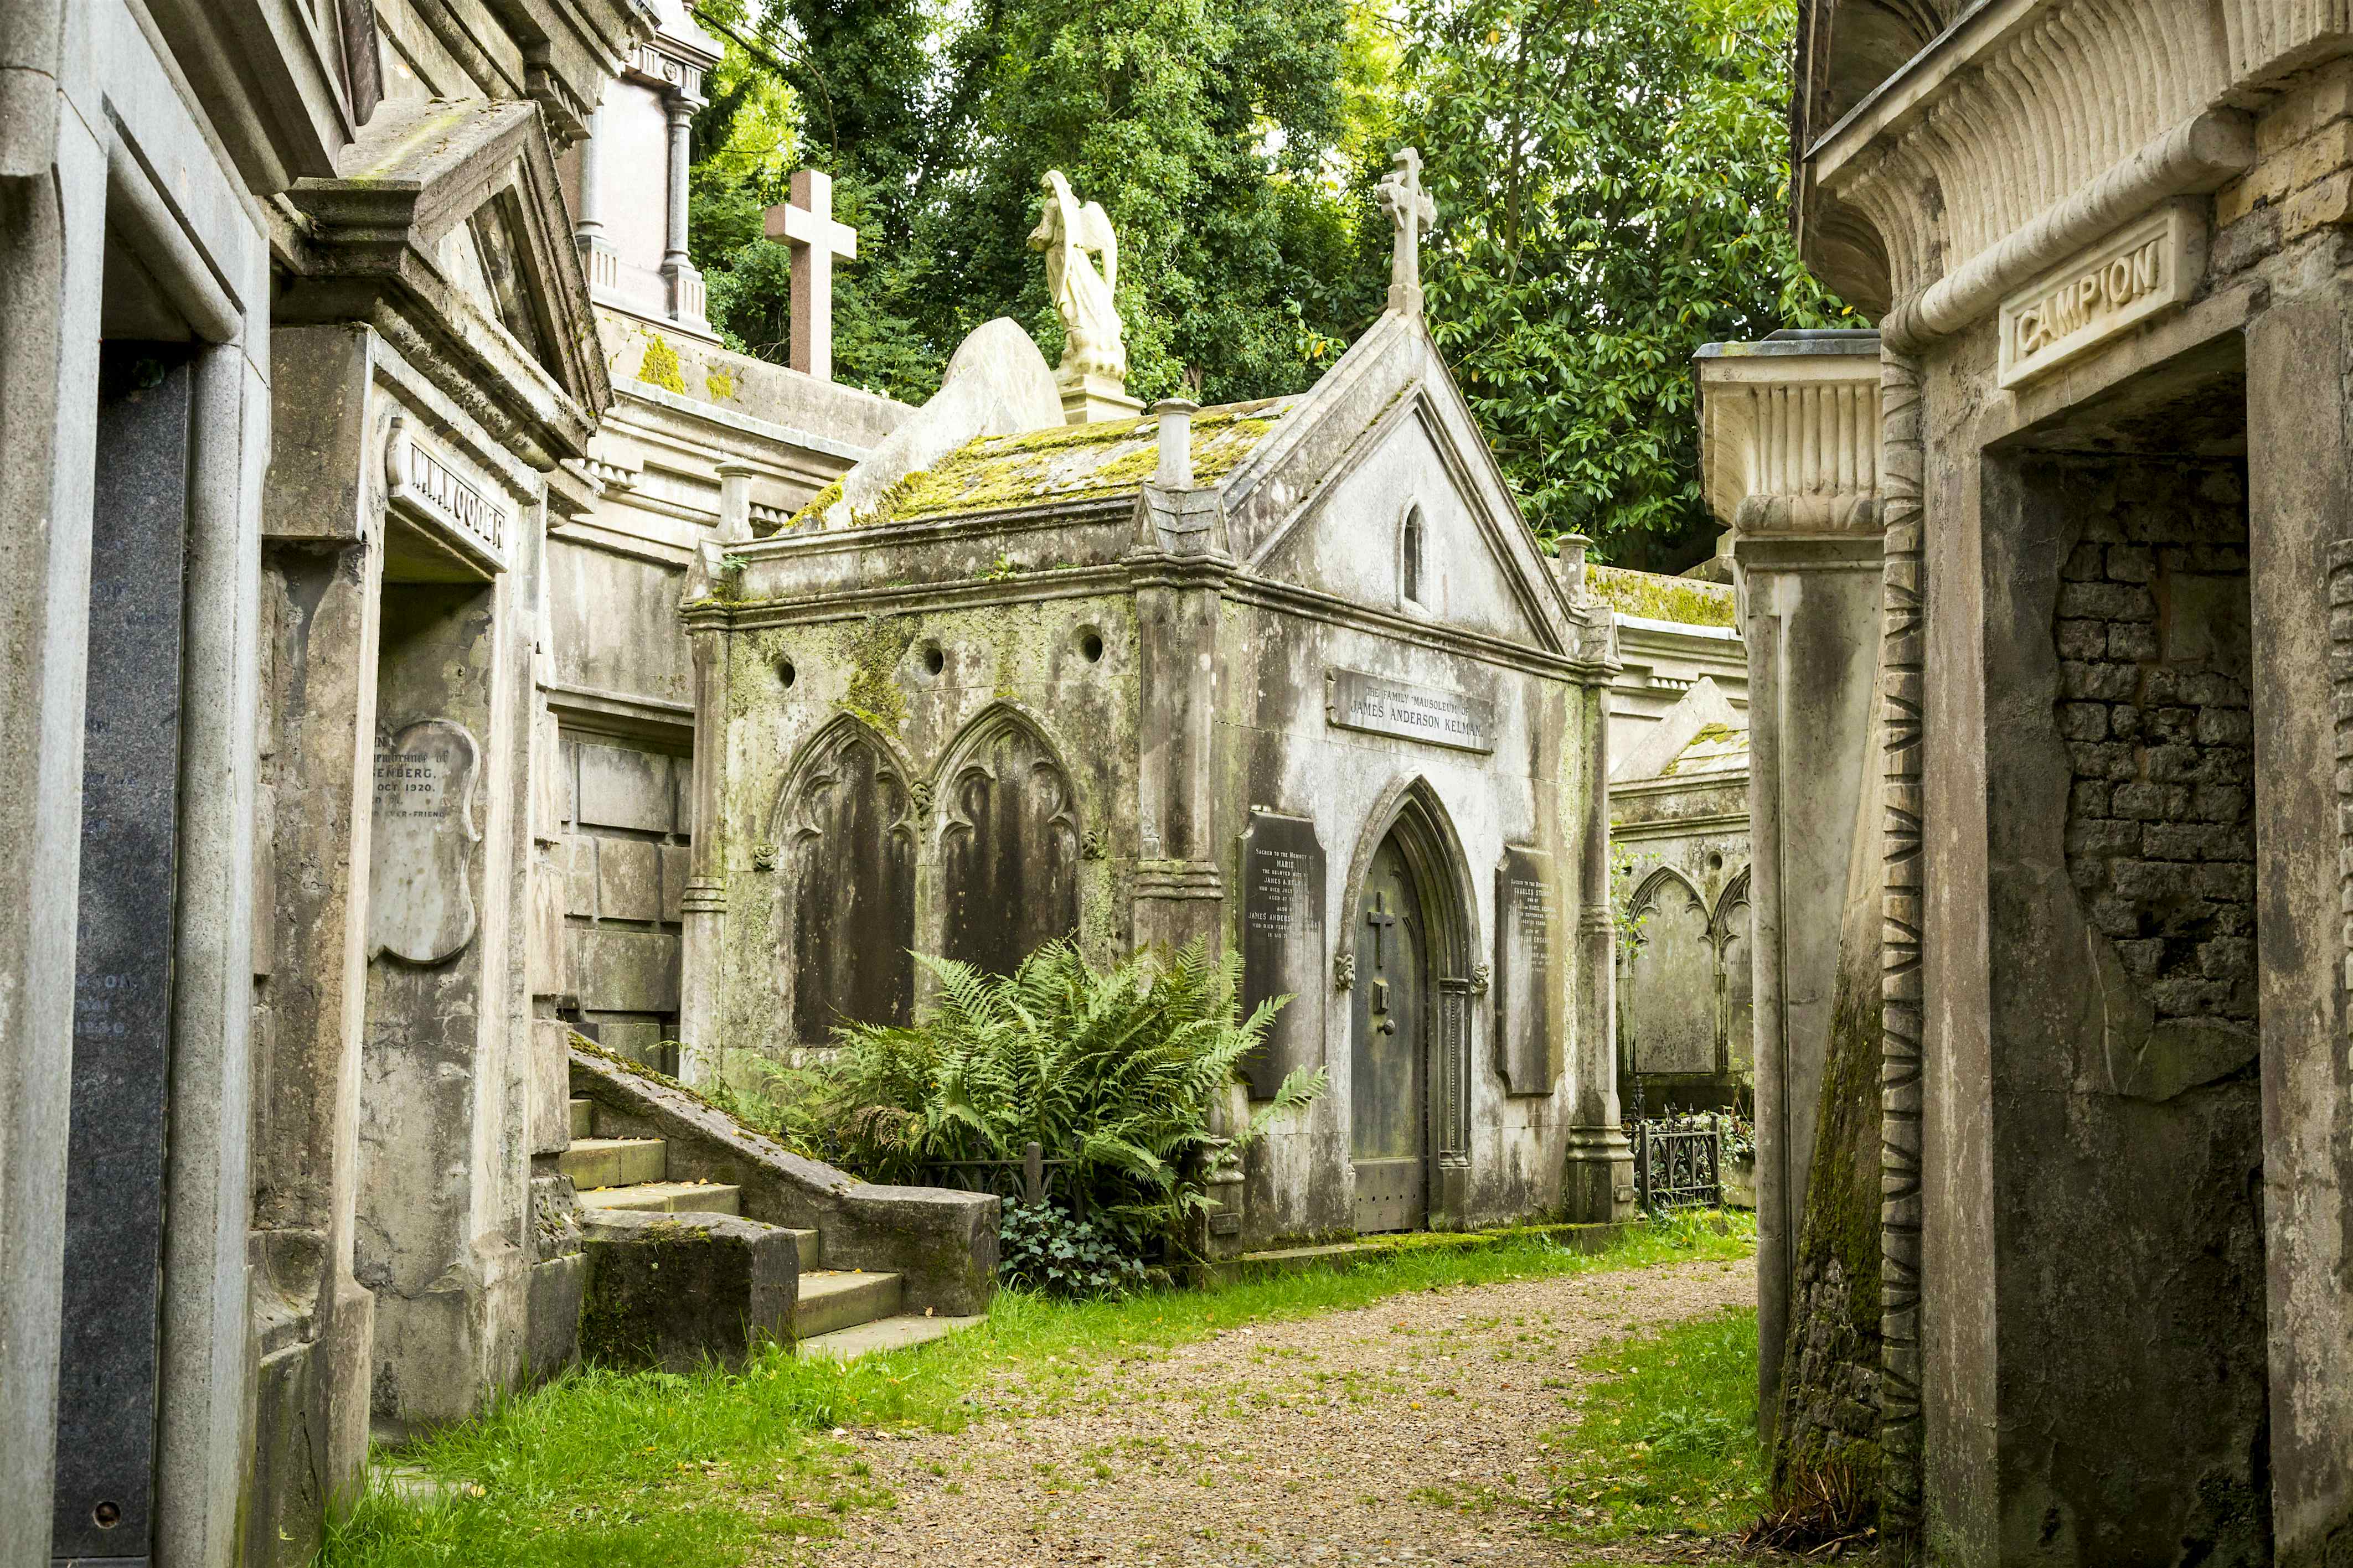 cemeteries to visit in london